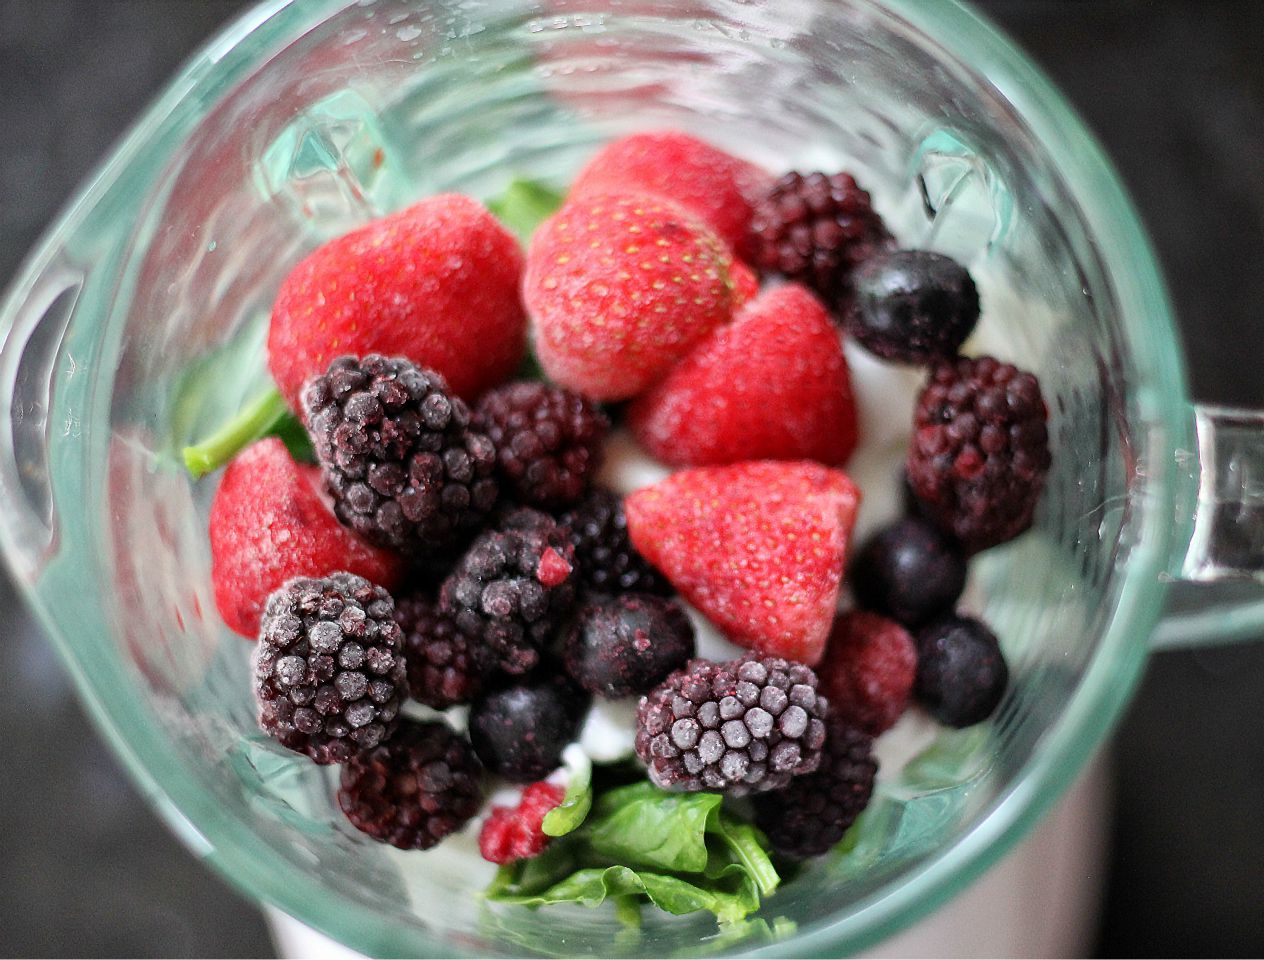 Delicious summer berries in a food processor jug